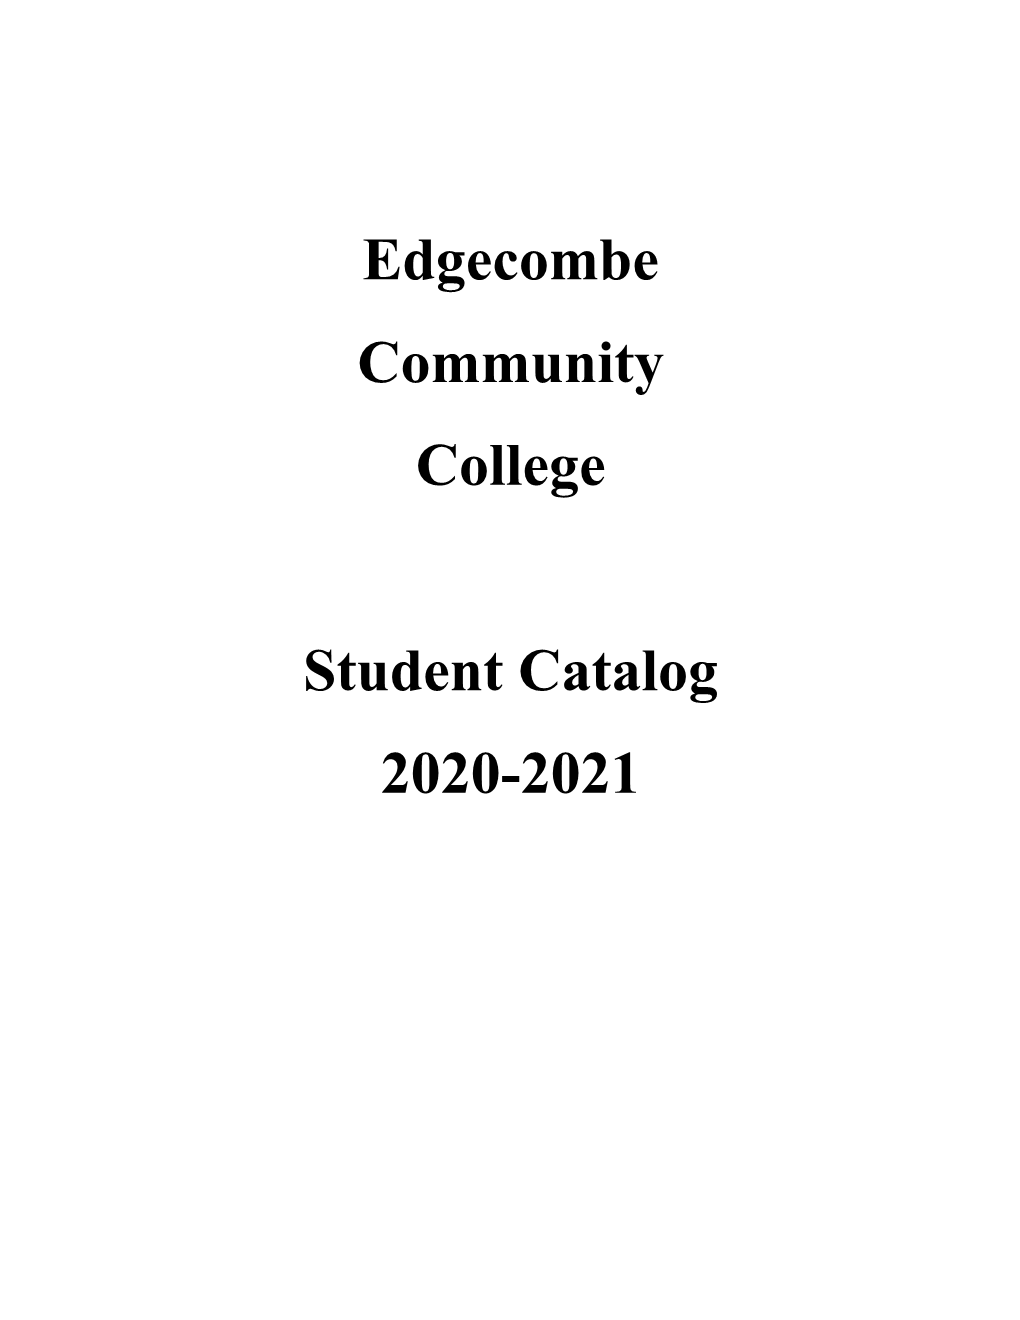 Edgecombe Community College Student Catalog 2020-2021